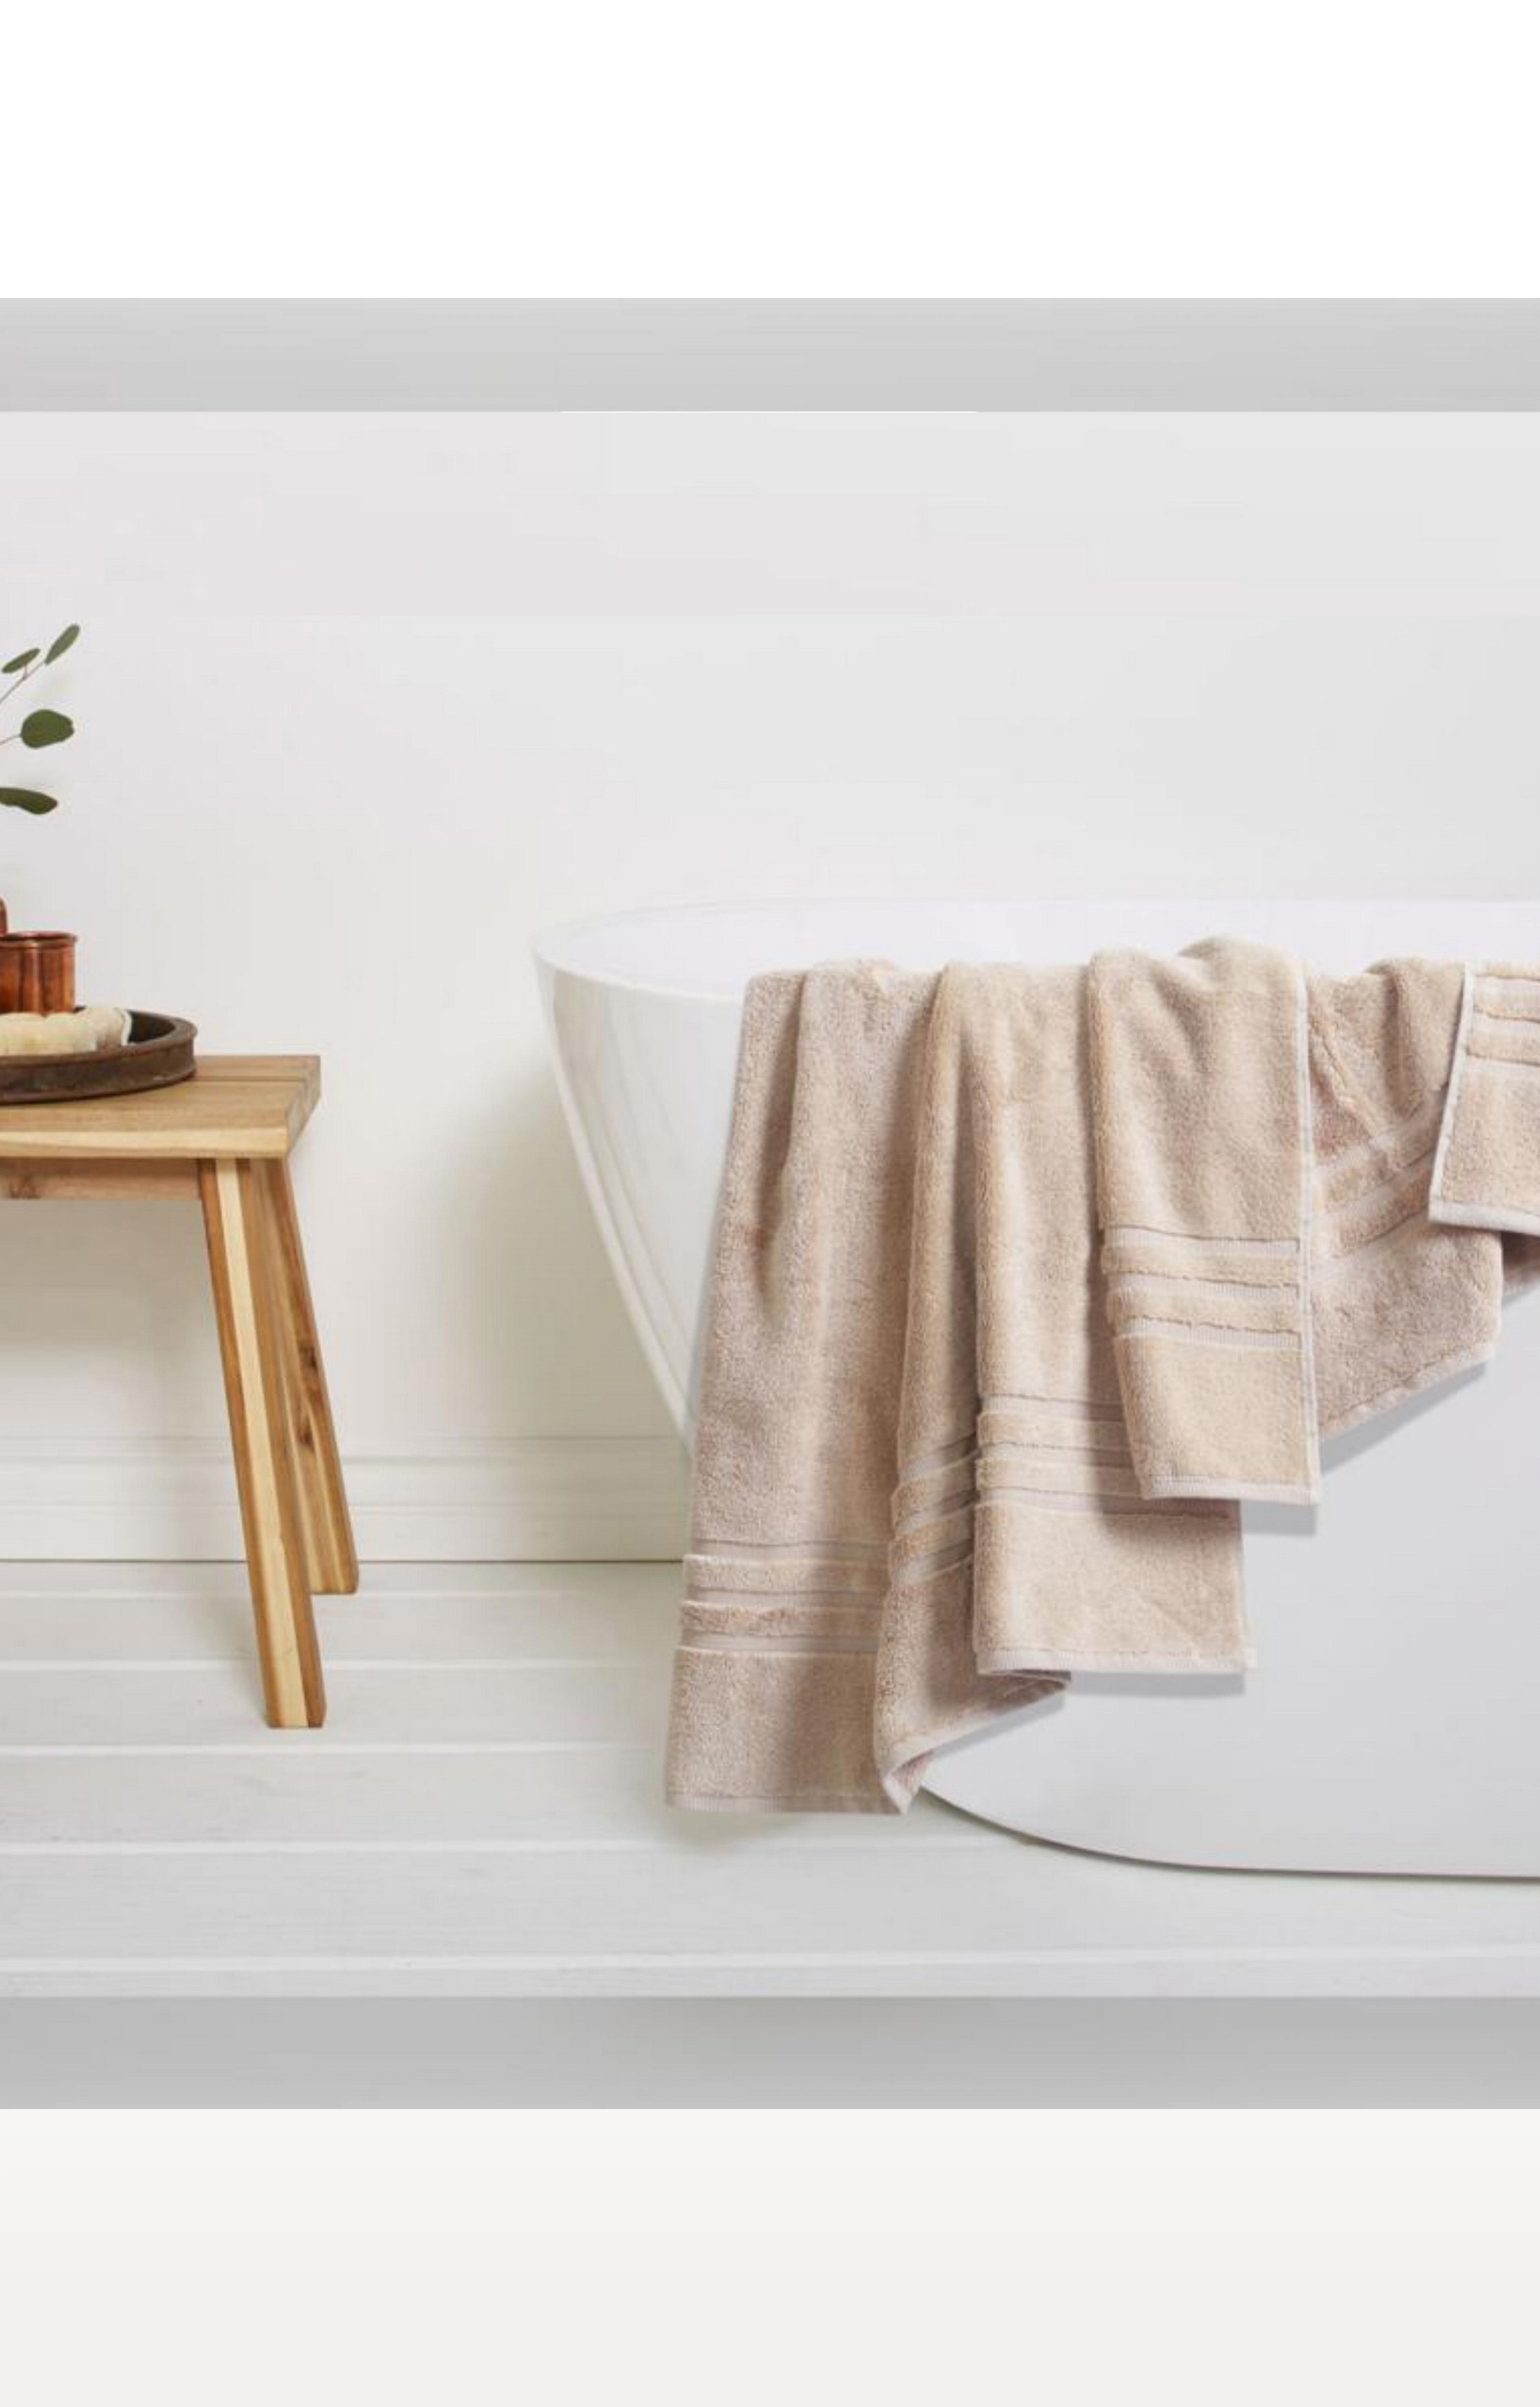 Sita Fabrics | Sita Fabrics Premium Cotton Super Soft Zero Twist Yarn Very Airy 600 GSM Bath Towel - Beige - (24x48 Inch) 0